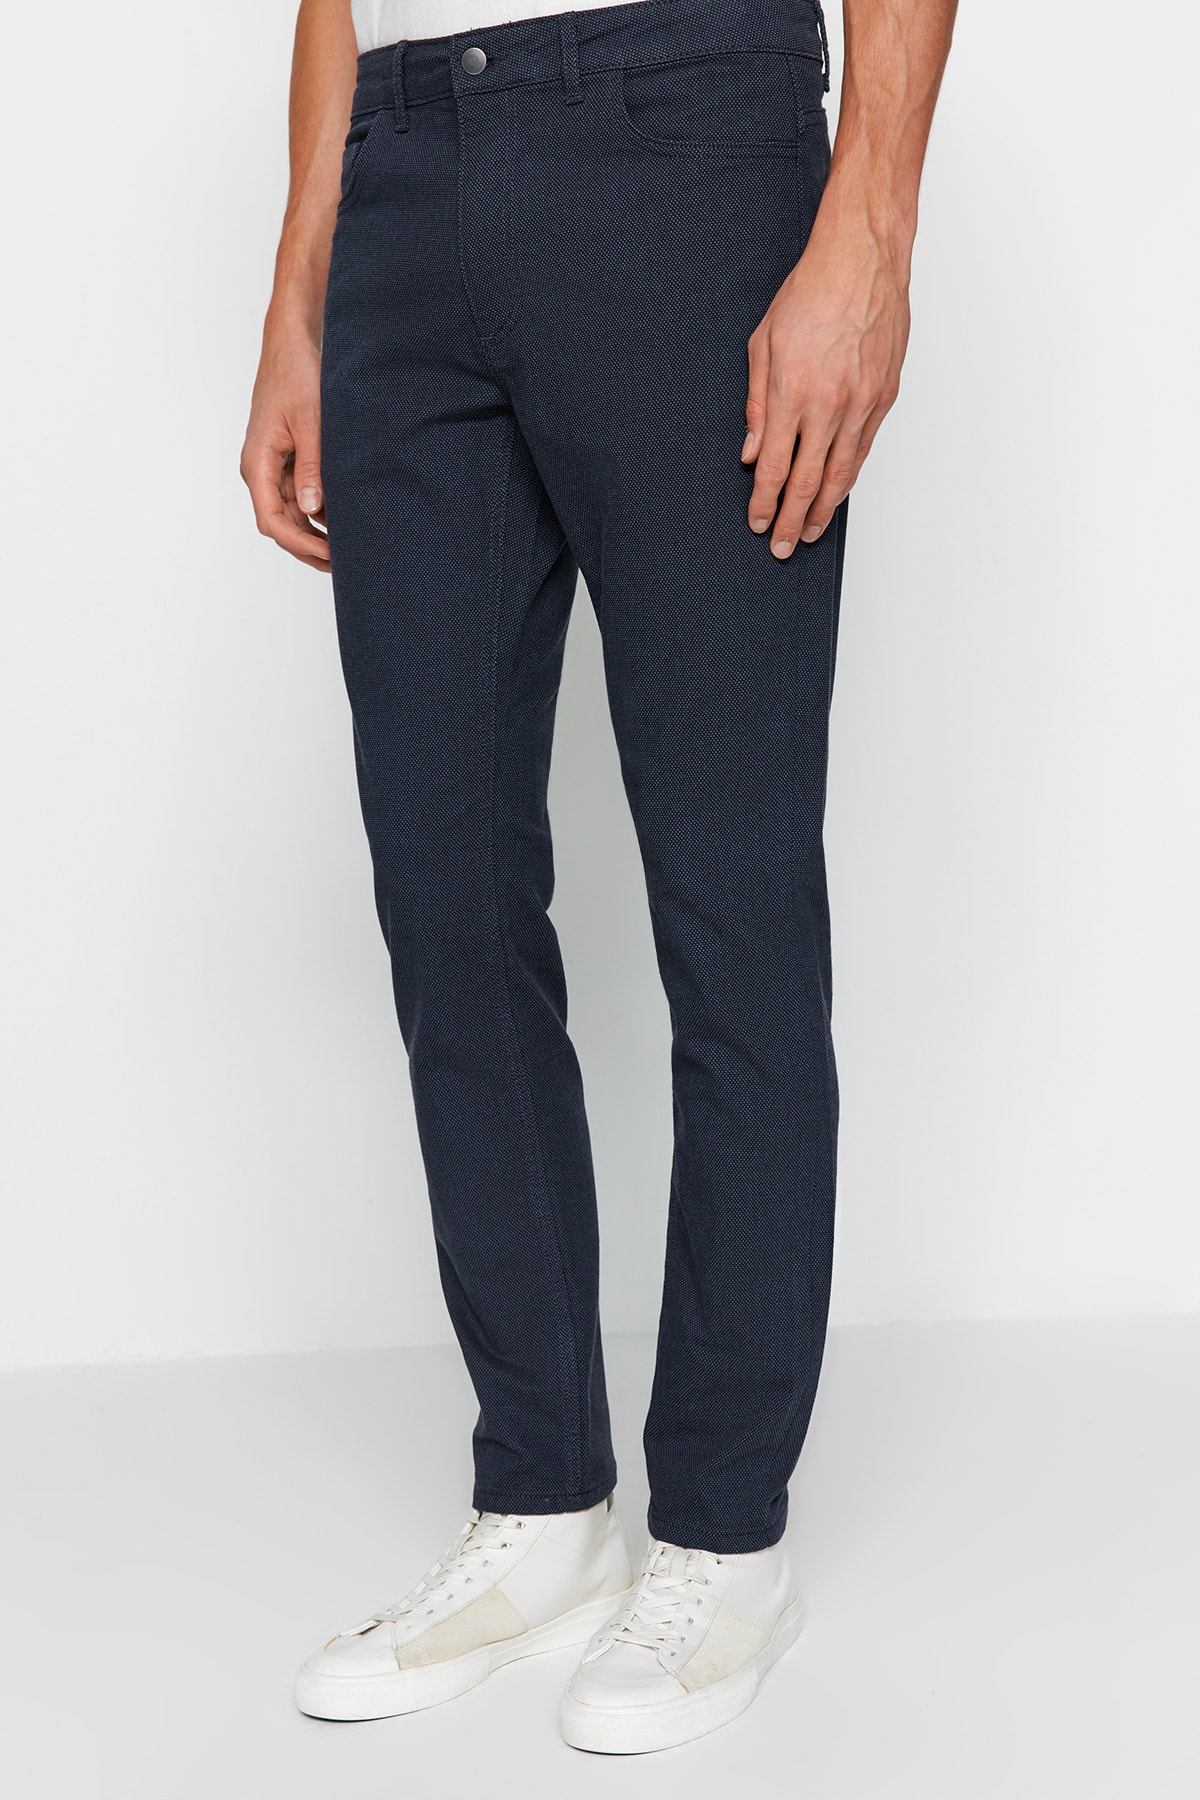 Trendyol Navy Blue Men's Slim Fit Textured Trousers